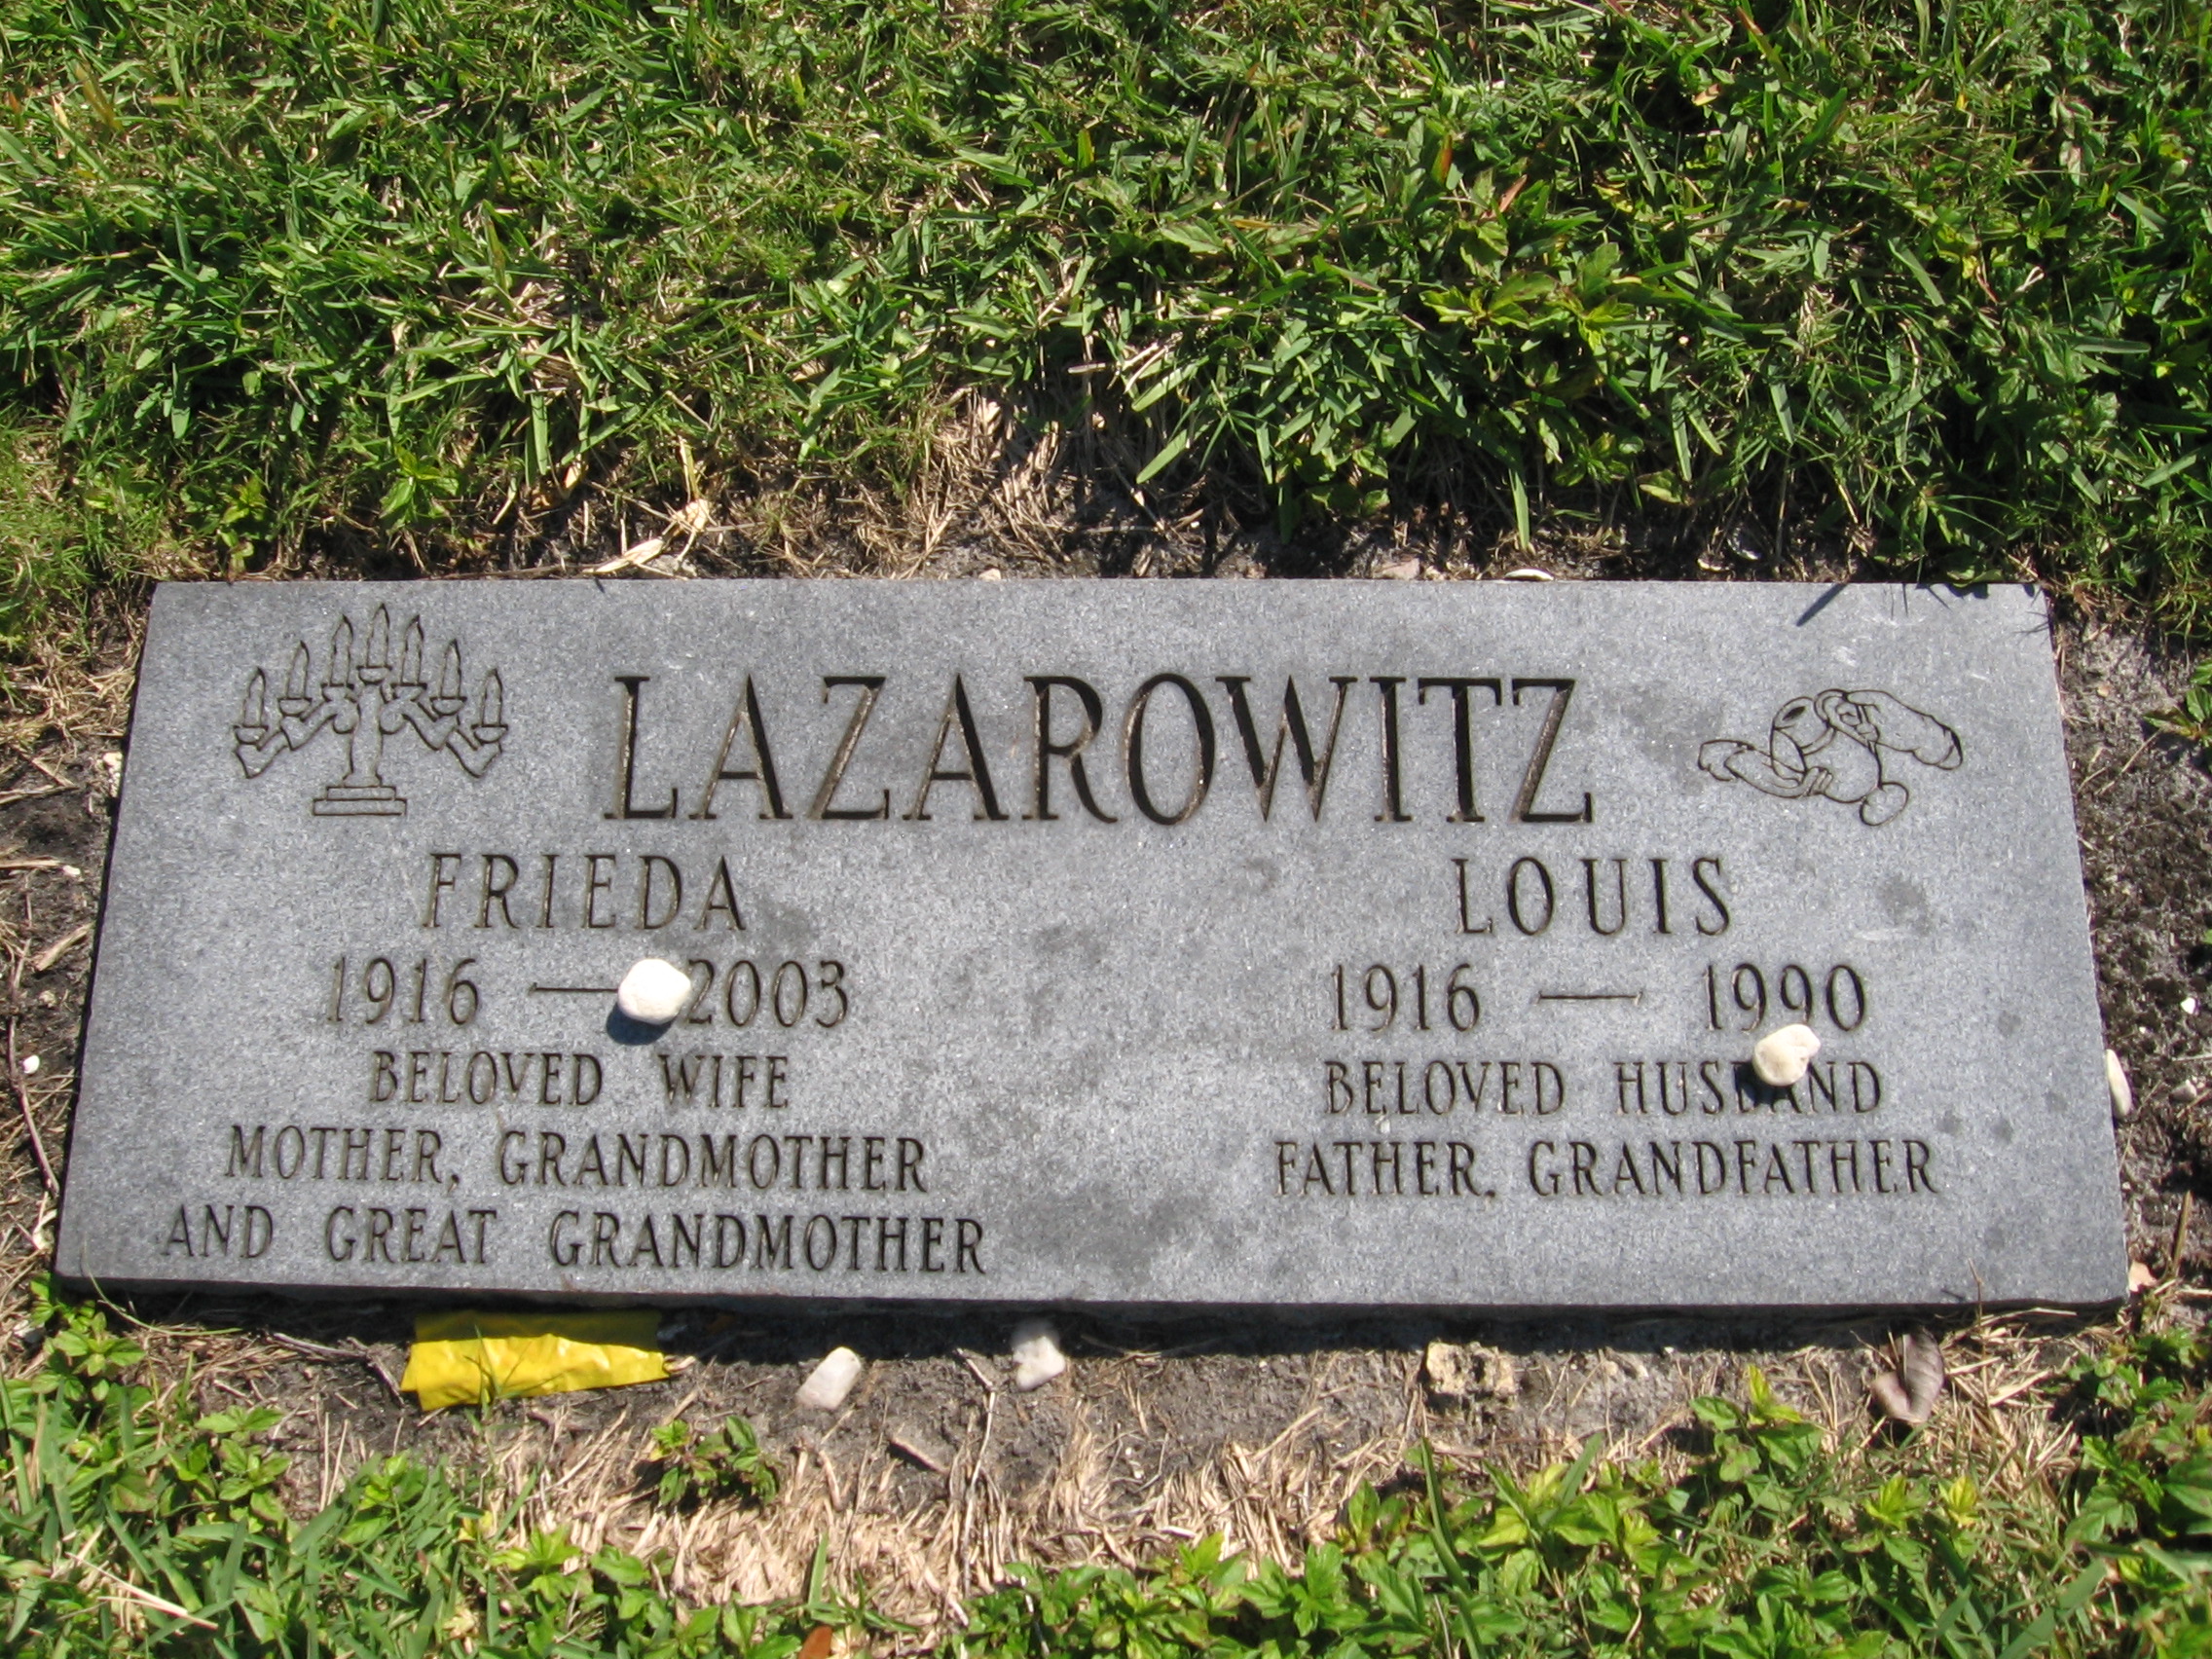 Louis Lazarowitz